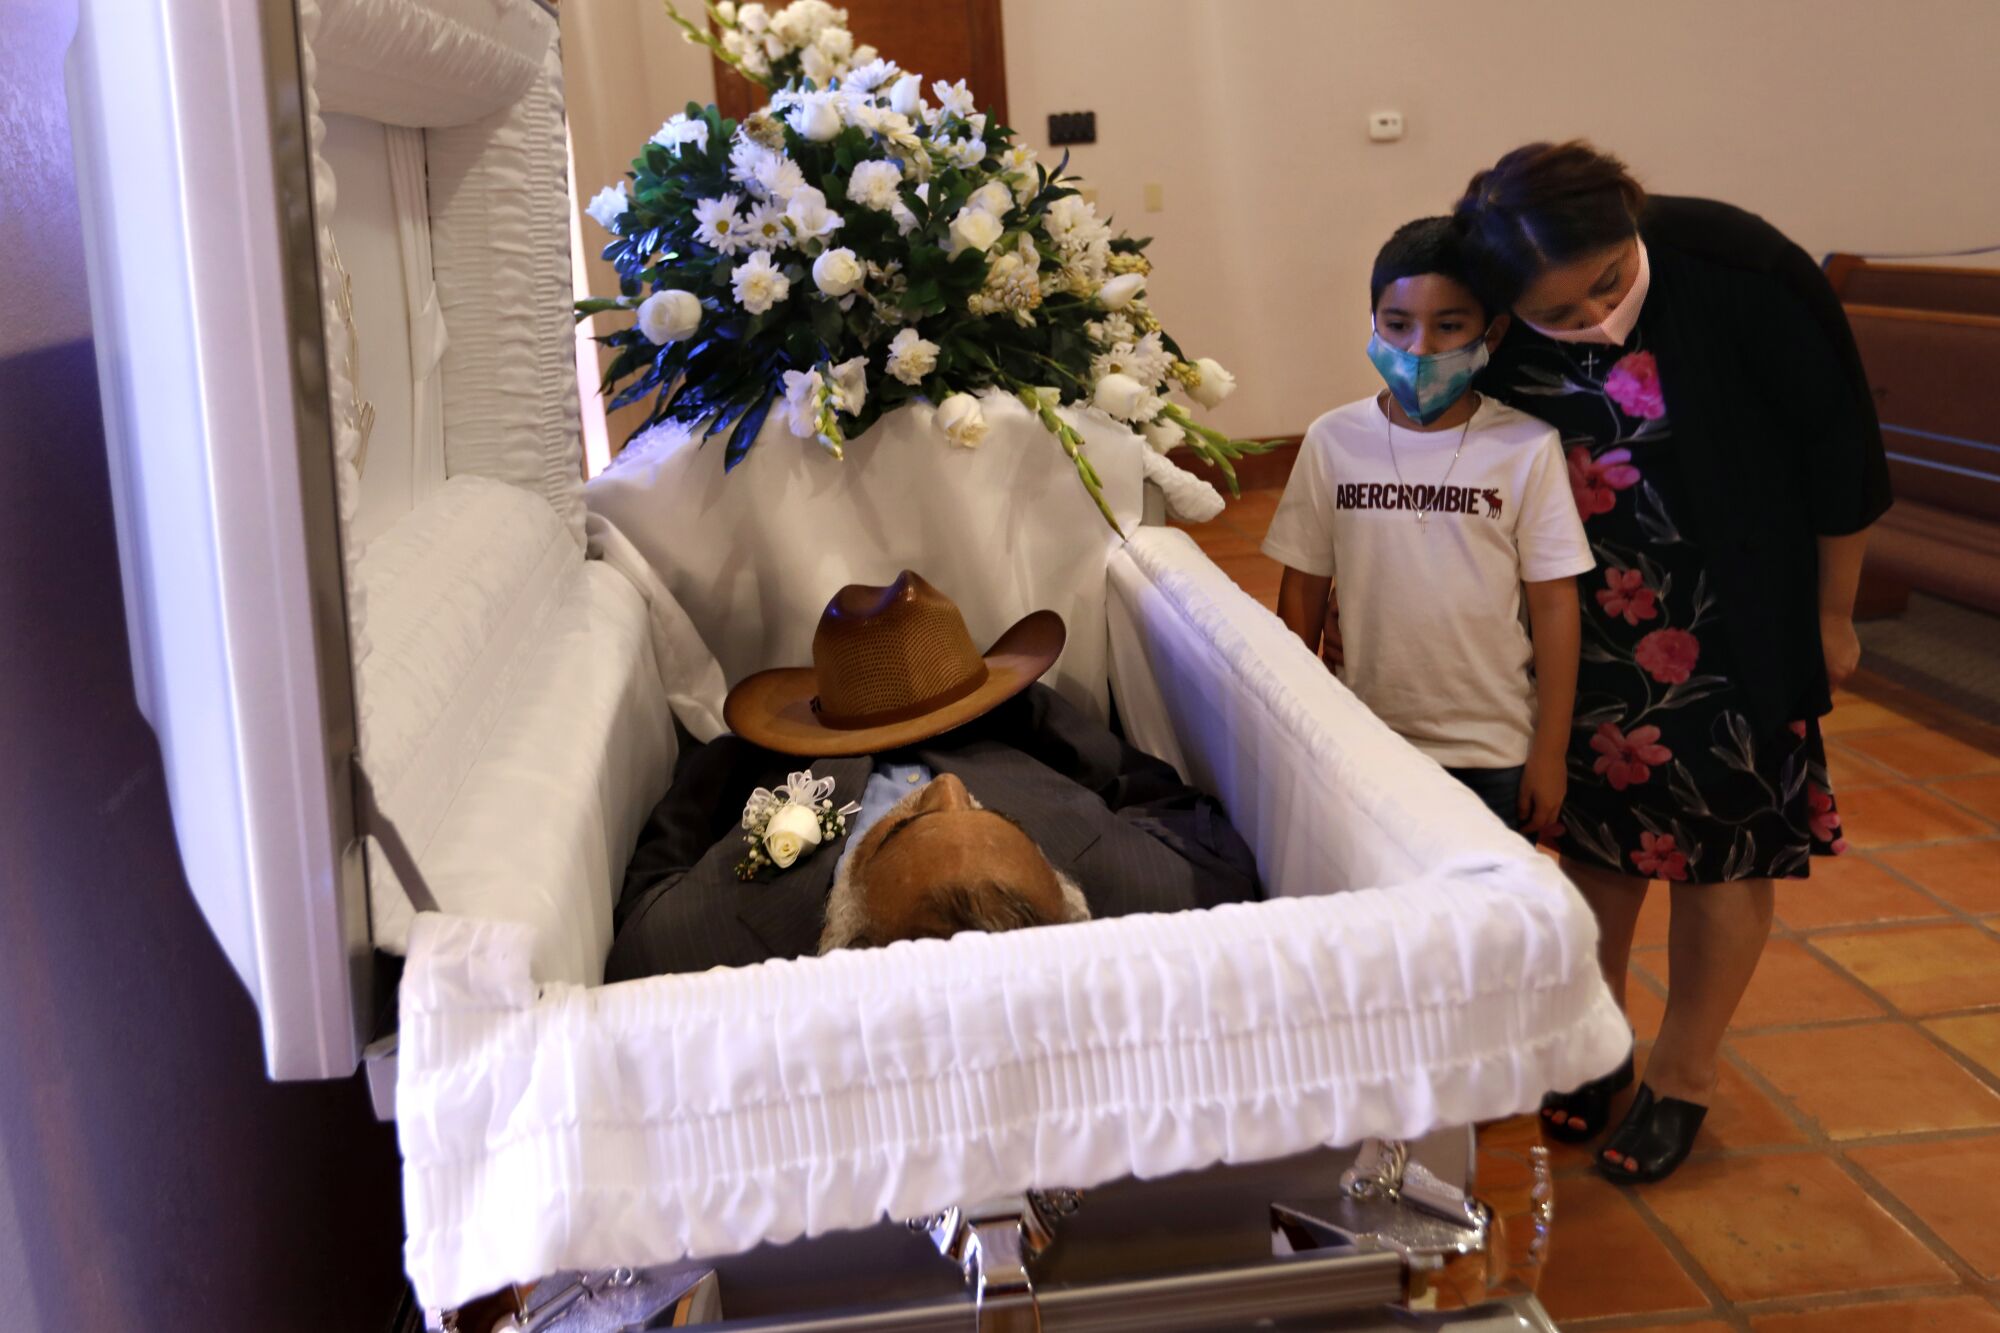 A funeral in McAllen, Texas